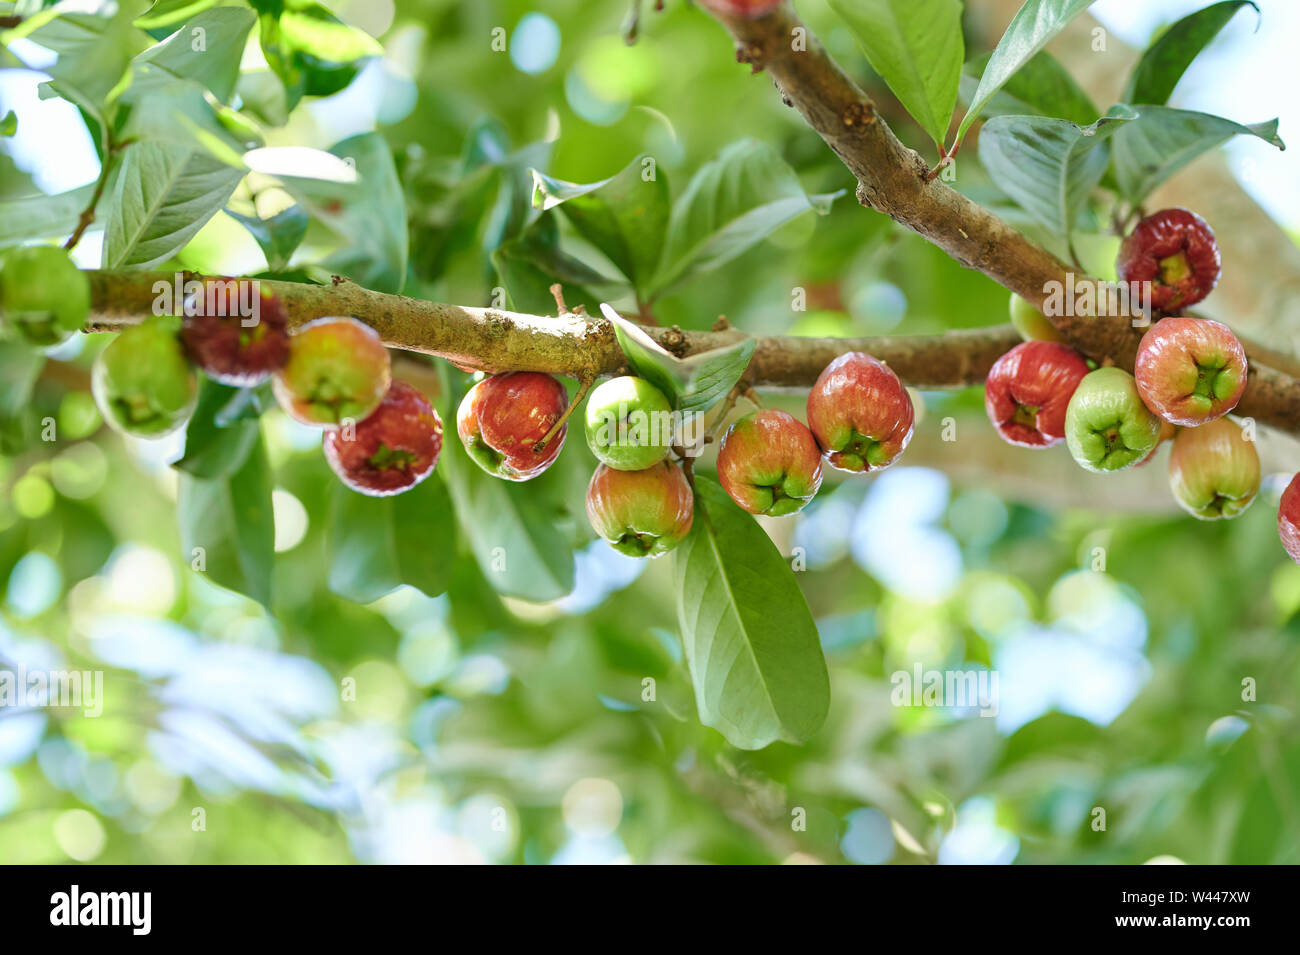 Sweet rose apple fruit hang on tree branch Stock Photo